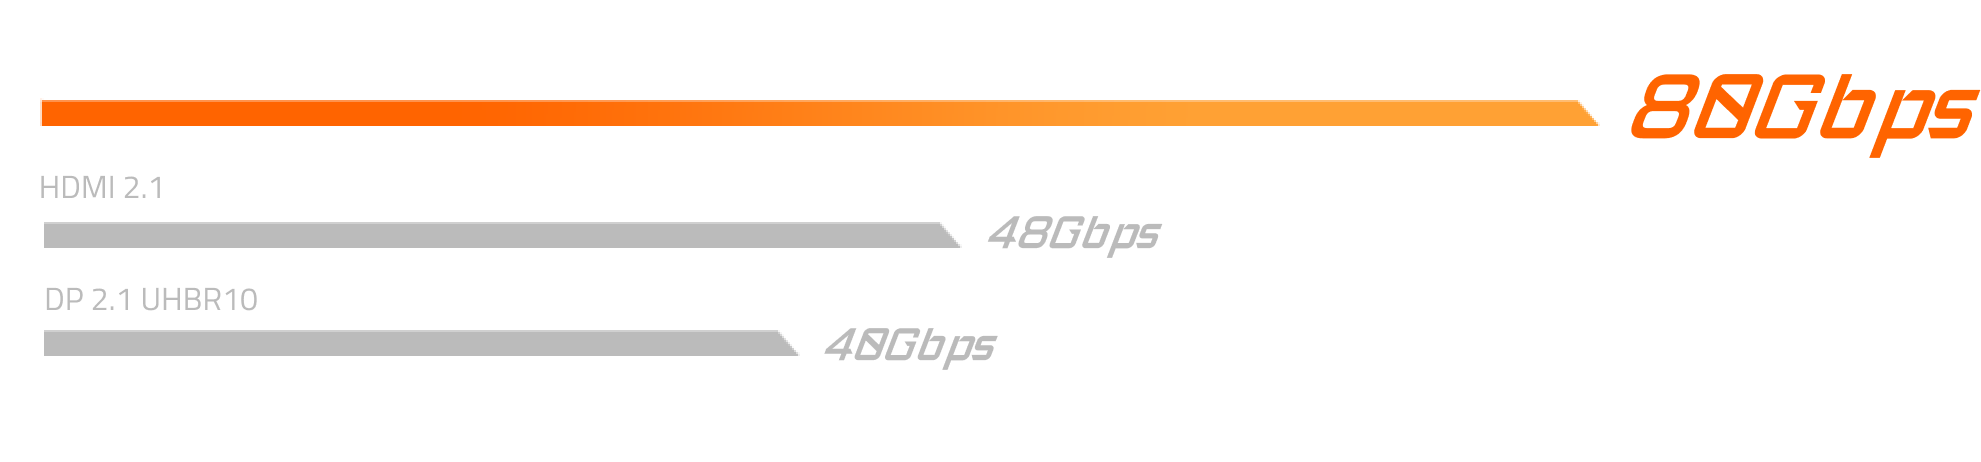 80Gbps bandwidth